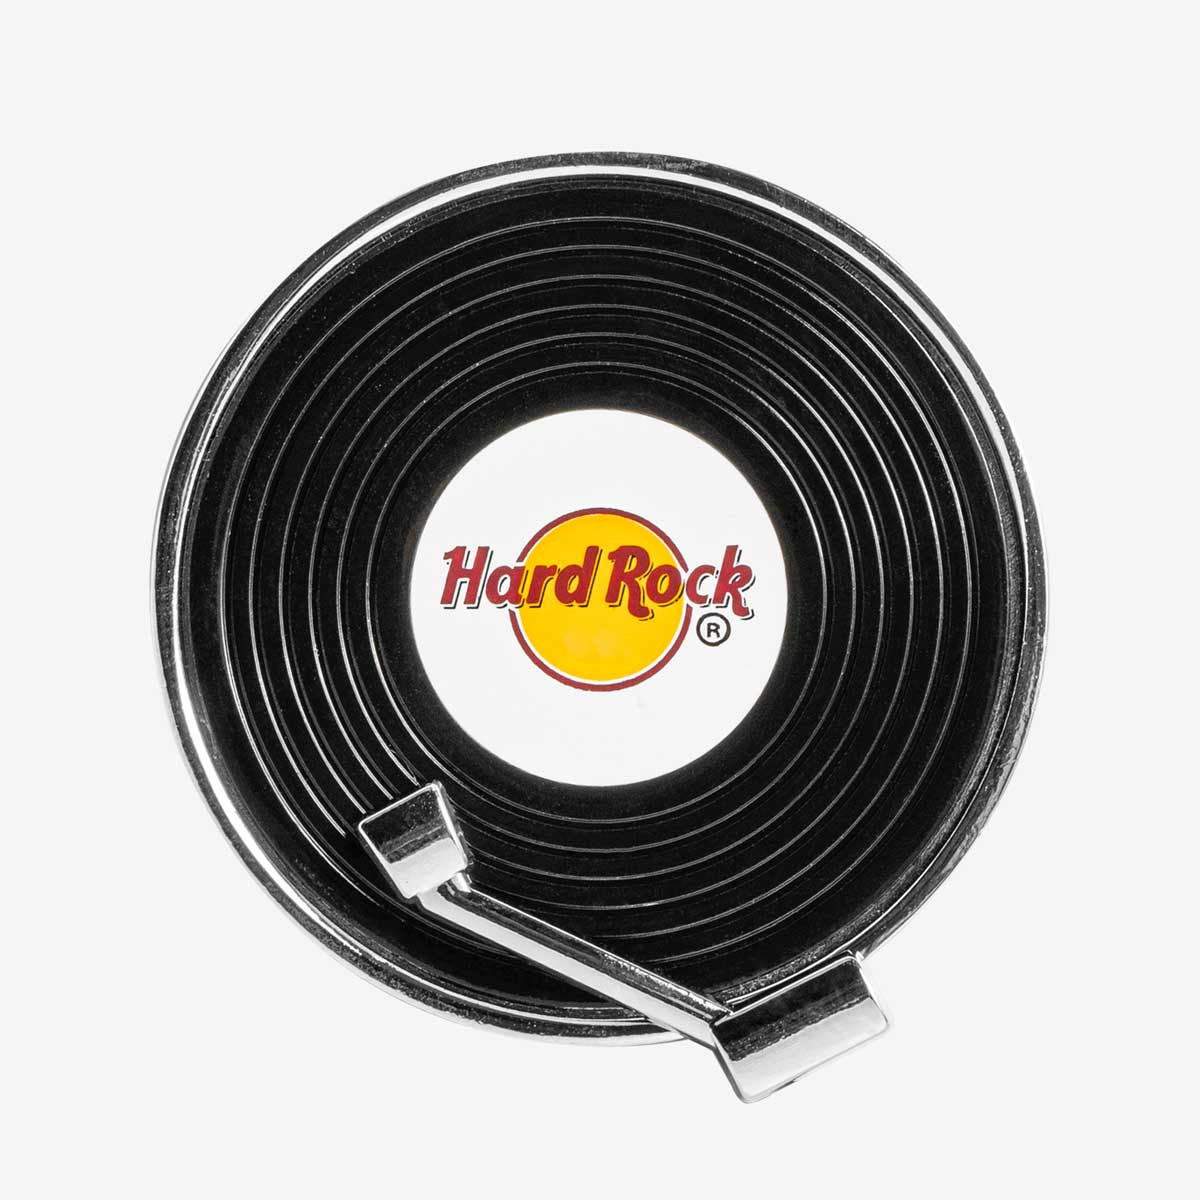 Hard Rock Spinning Record Magnet image number 1